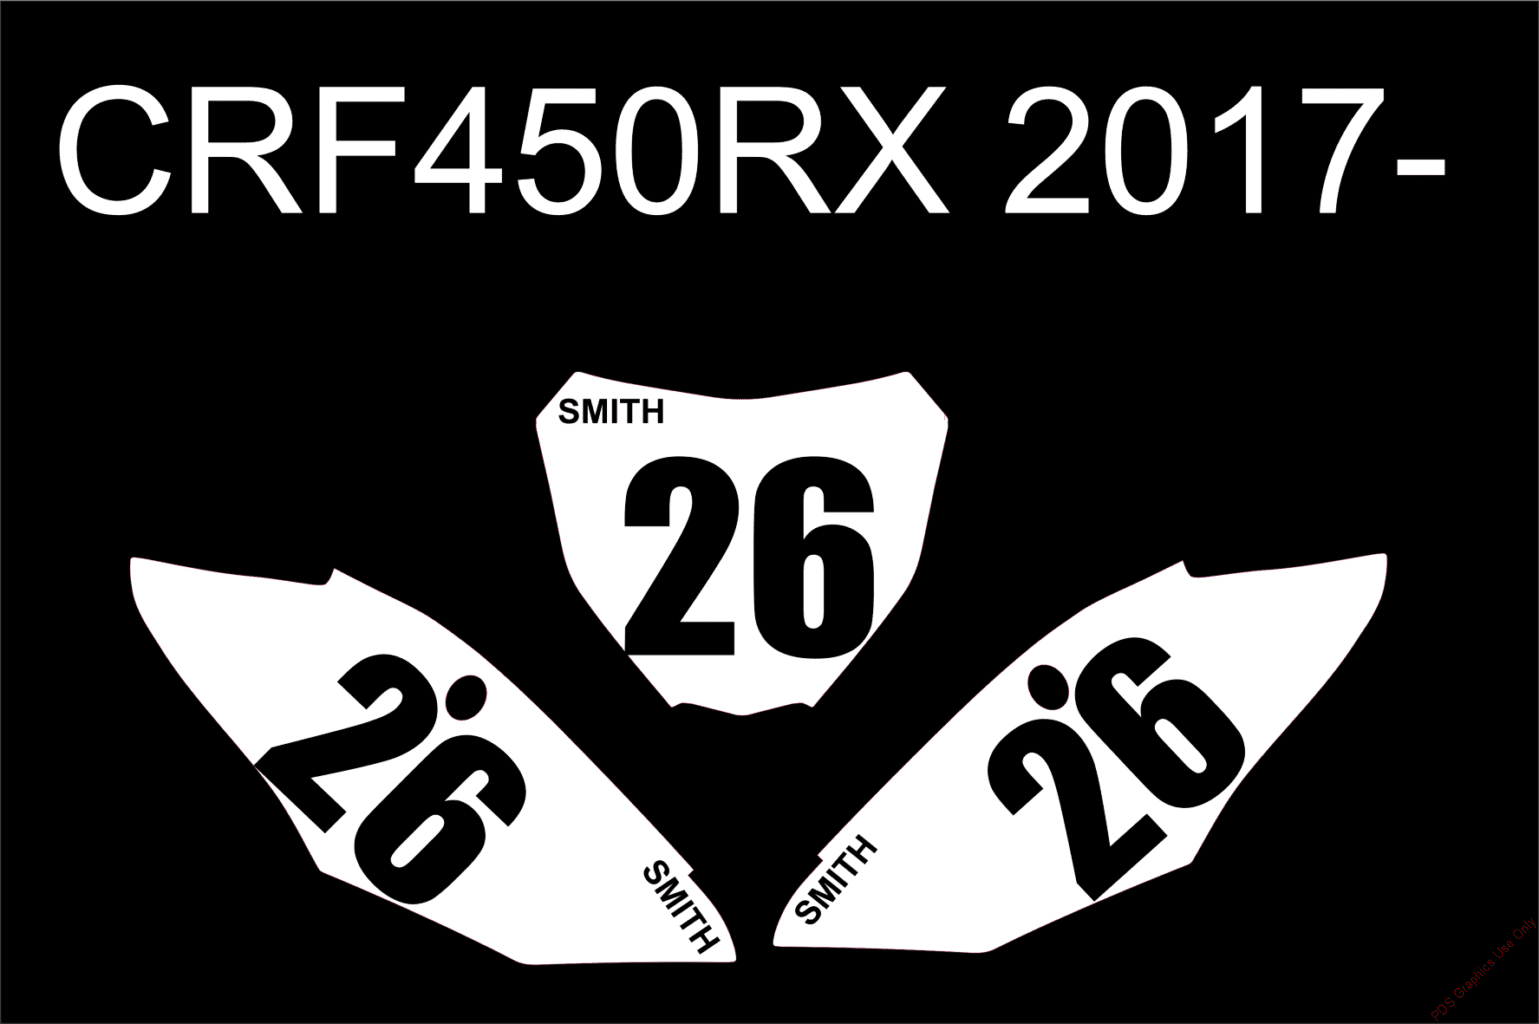 CRF450RX 2017 - Basic